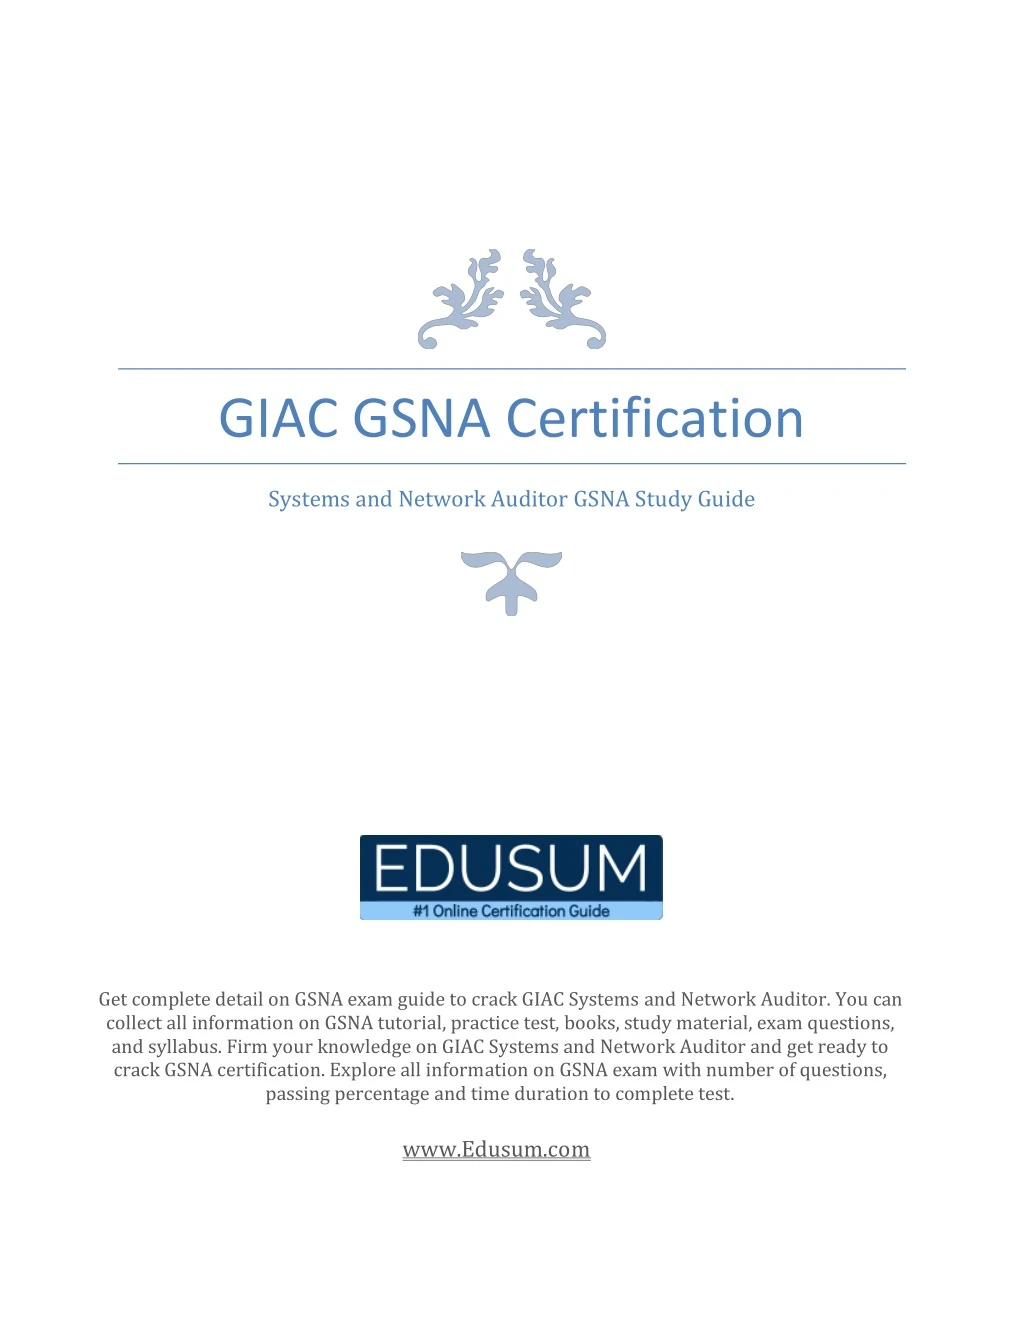 giac gsna certification